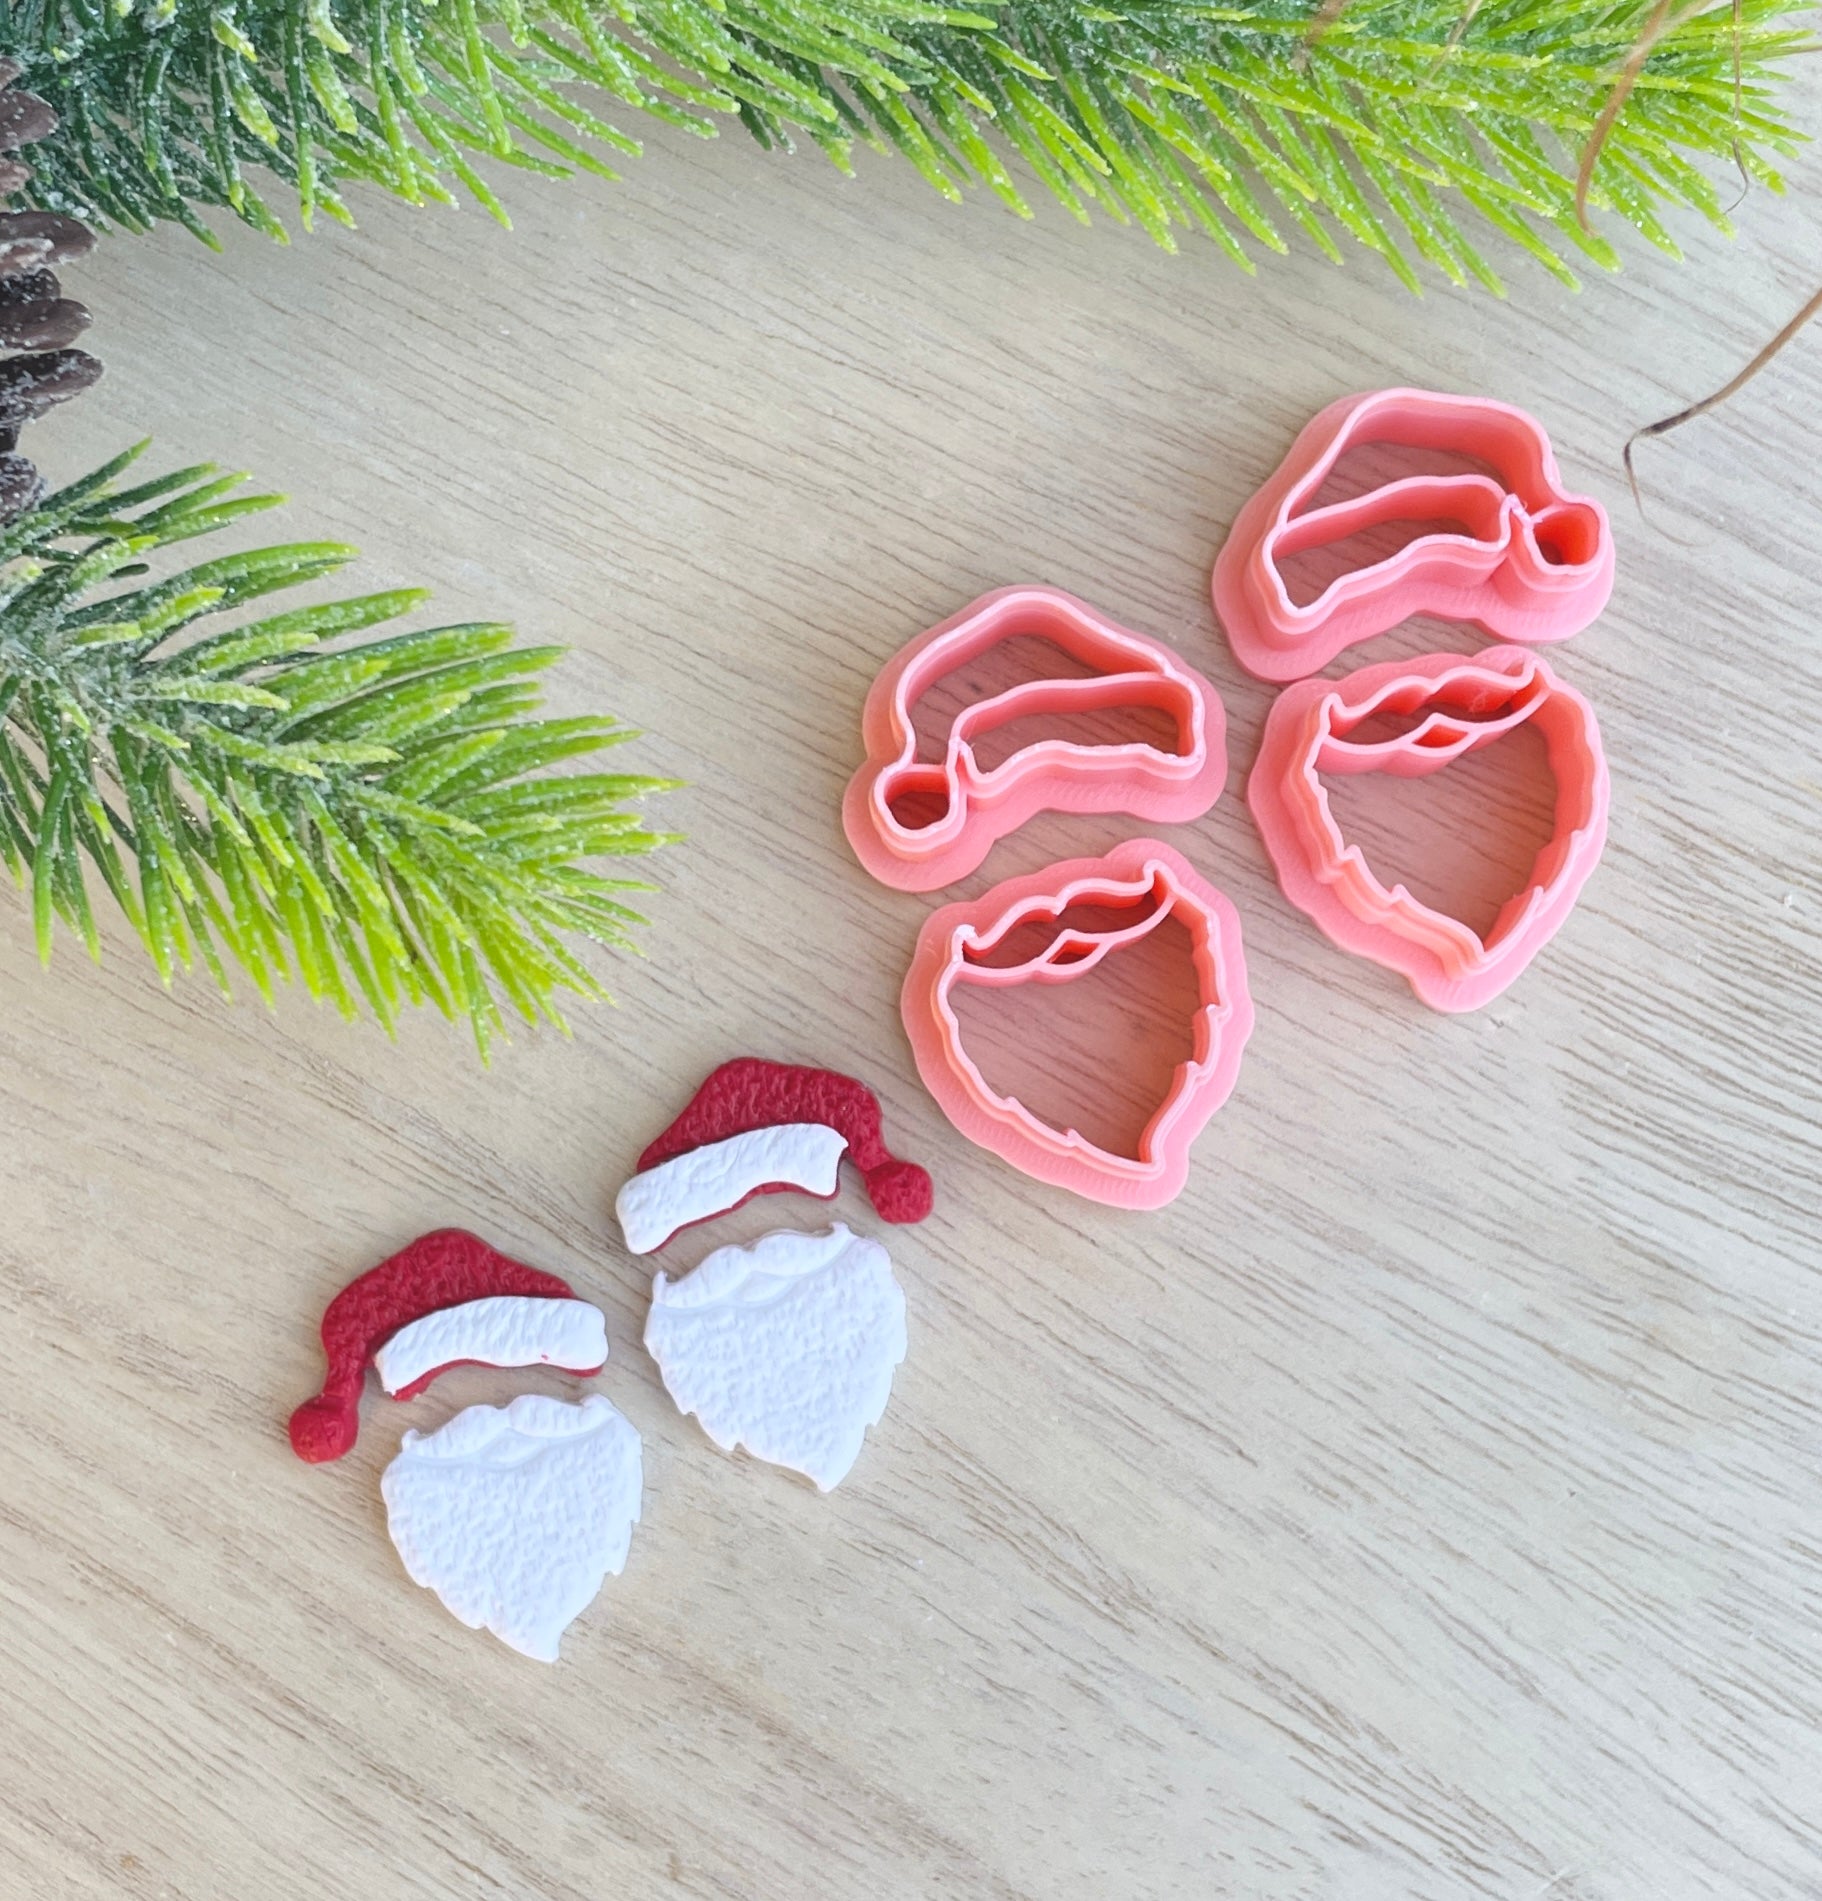 Santa hat & beard mirrored set of 4 pieces